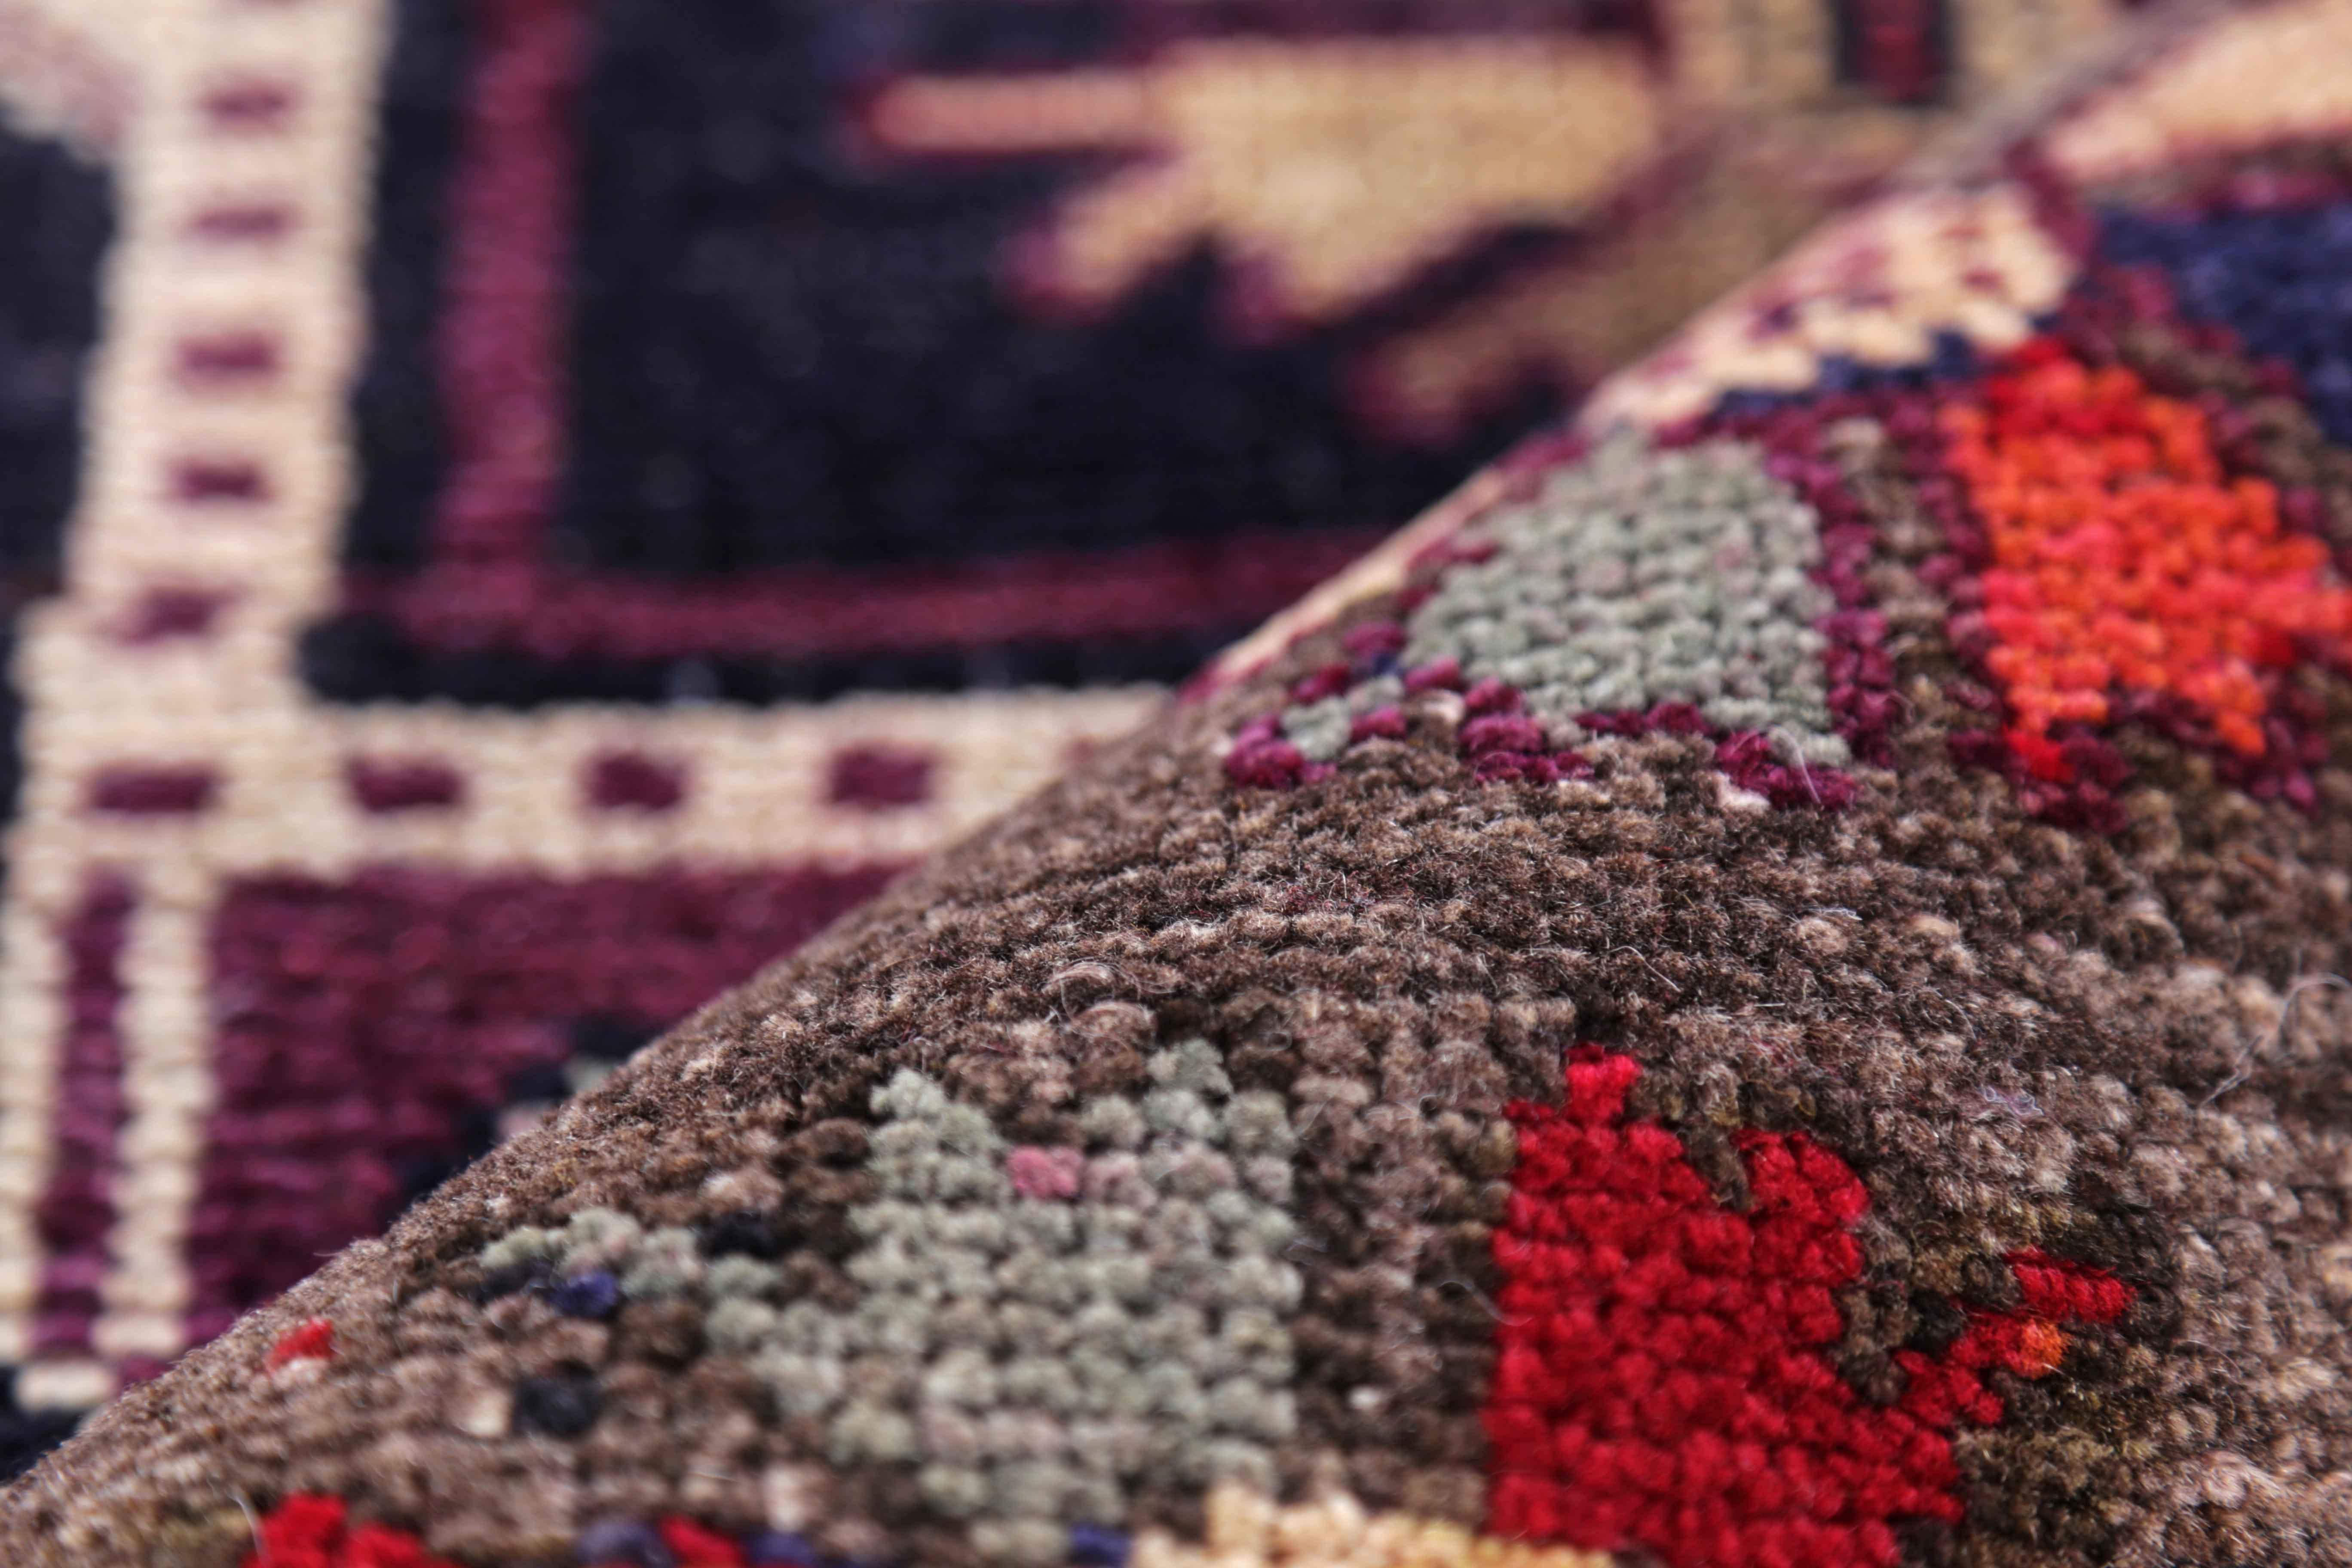 20th Century Antique Persian Area Rug Azerbaijan Design For Sale